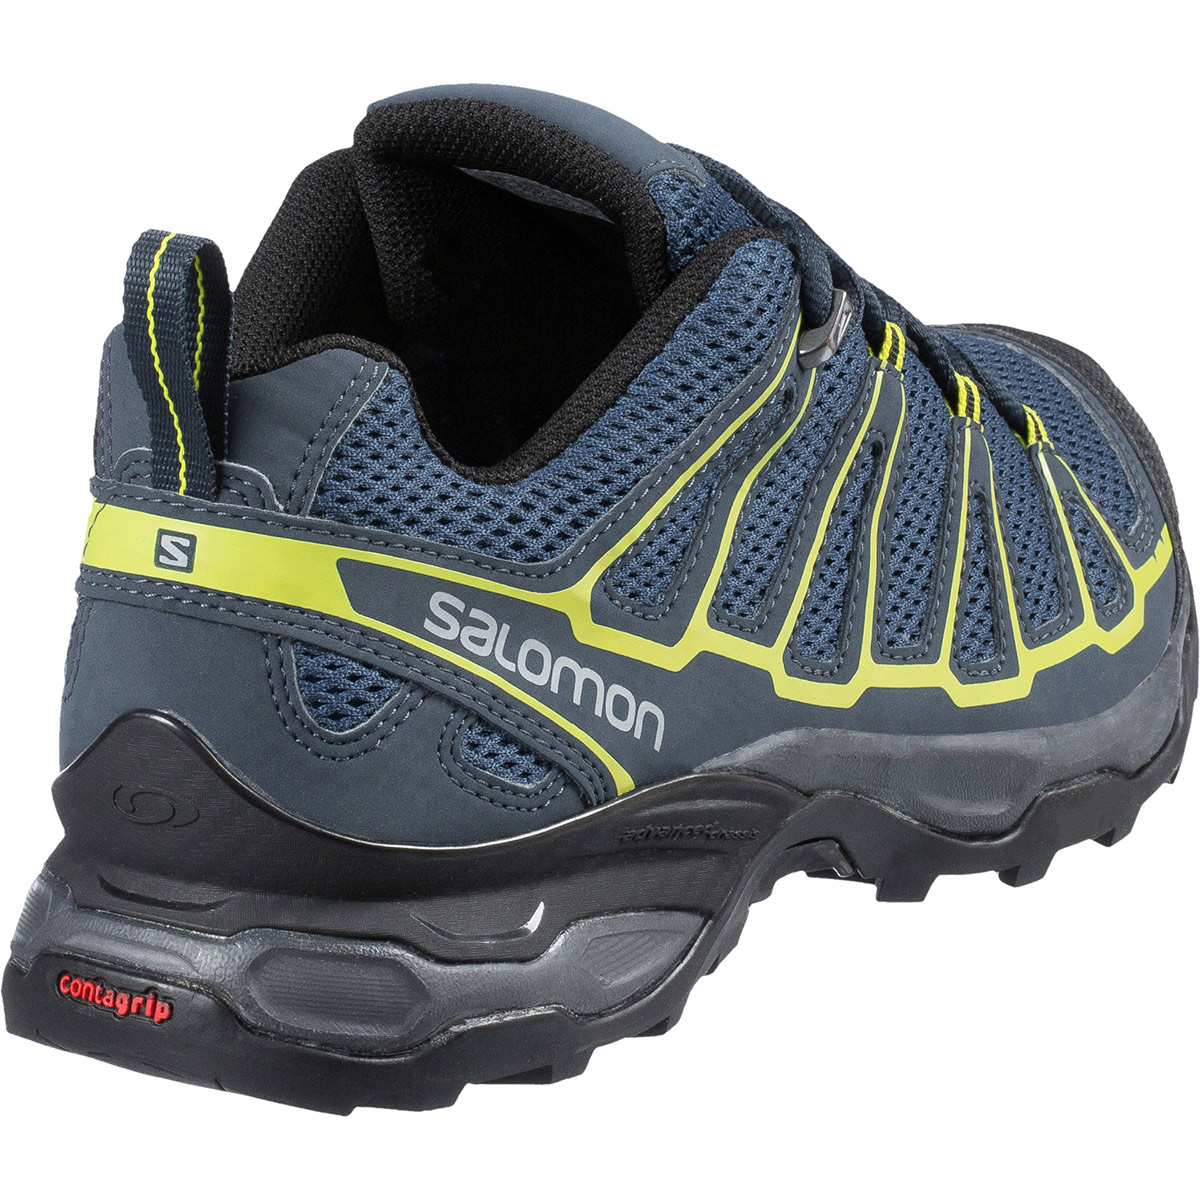 men's salomon x ultra hiking shoes